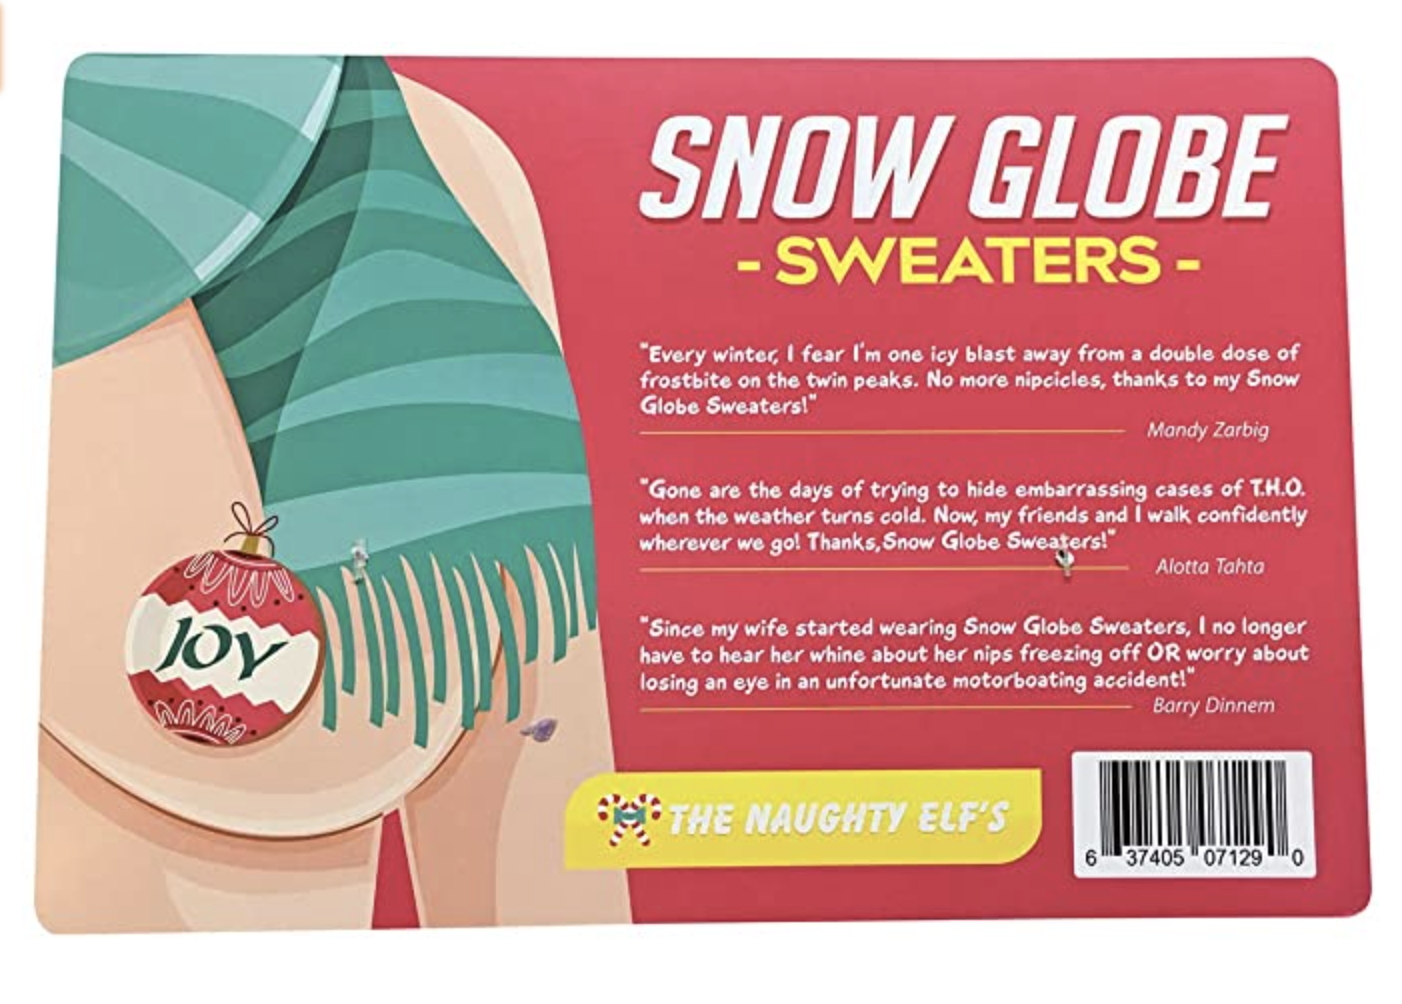 Snow globe nipple sweaters - Useless Things to Buy!